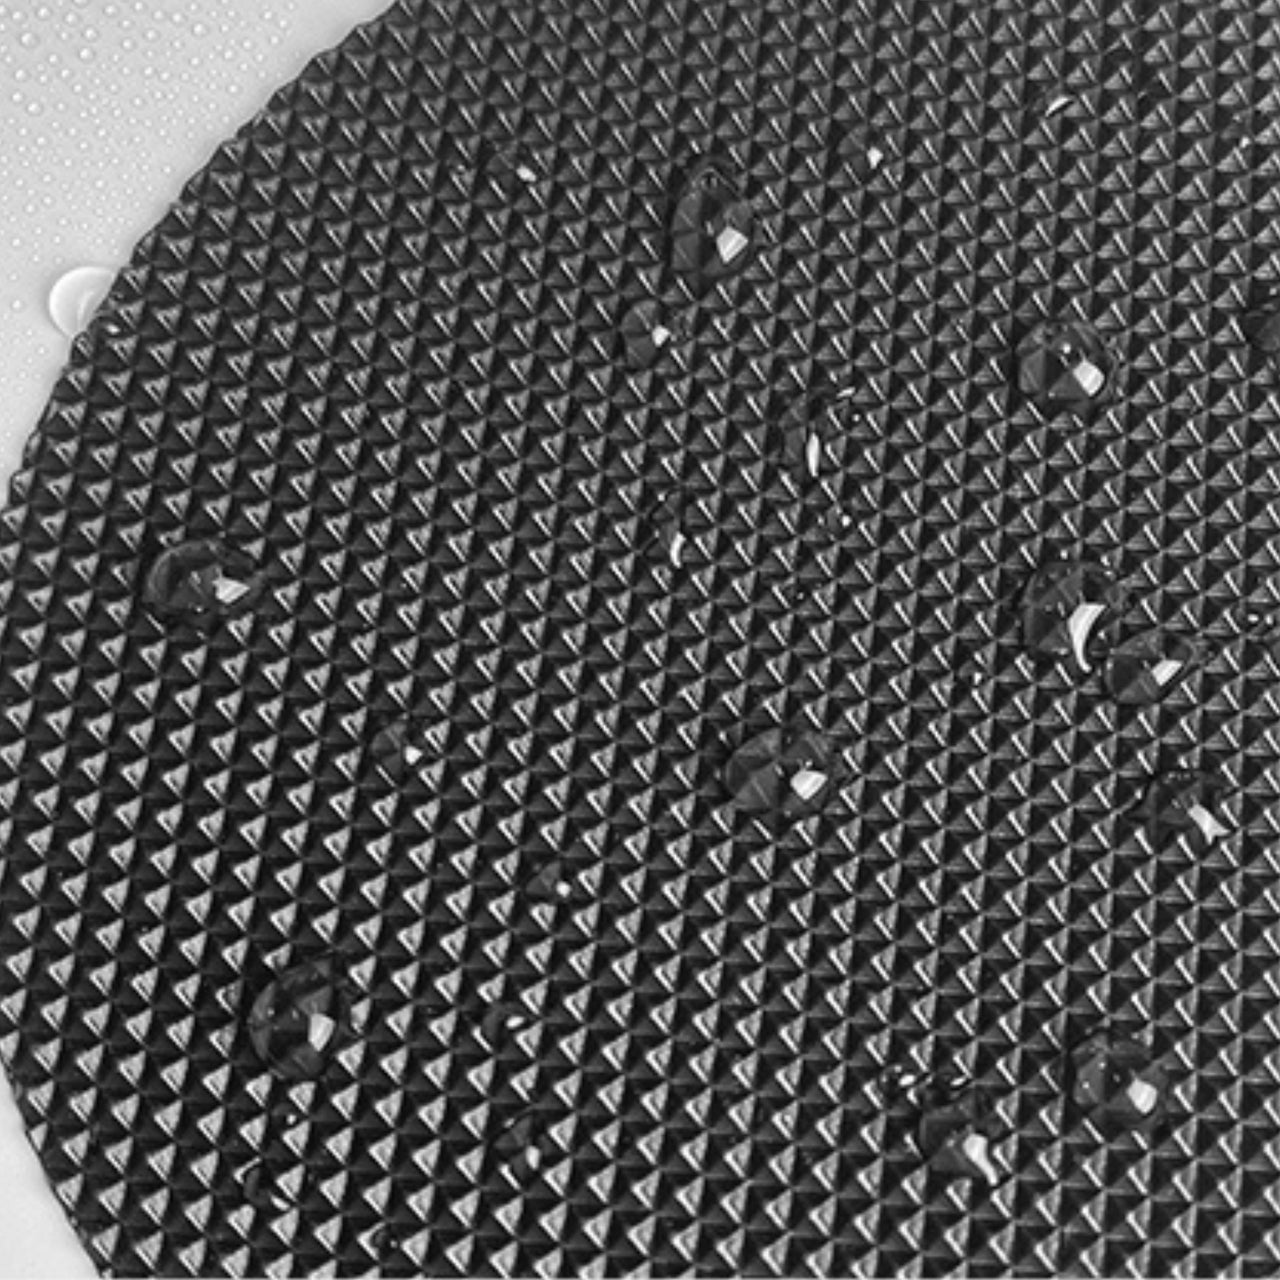 water resistant anti slip grip dots in grey